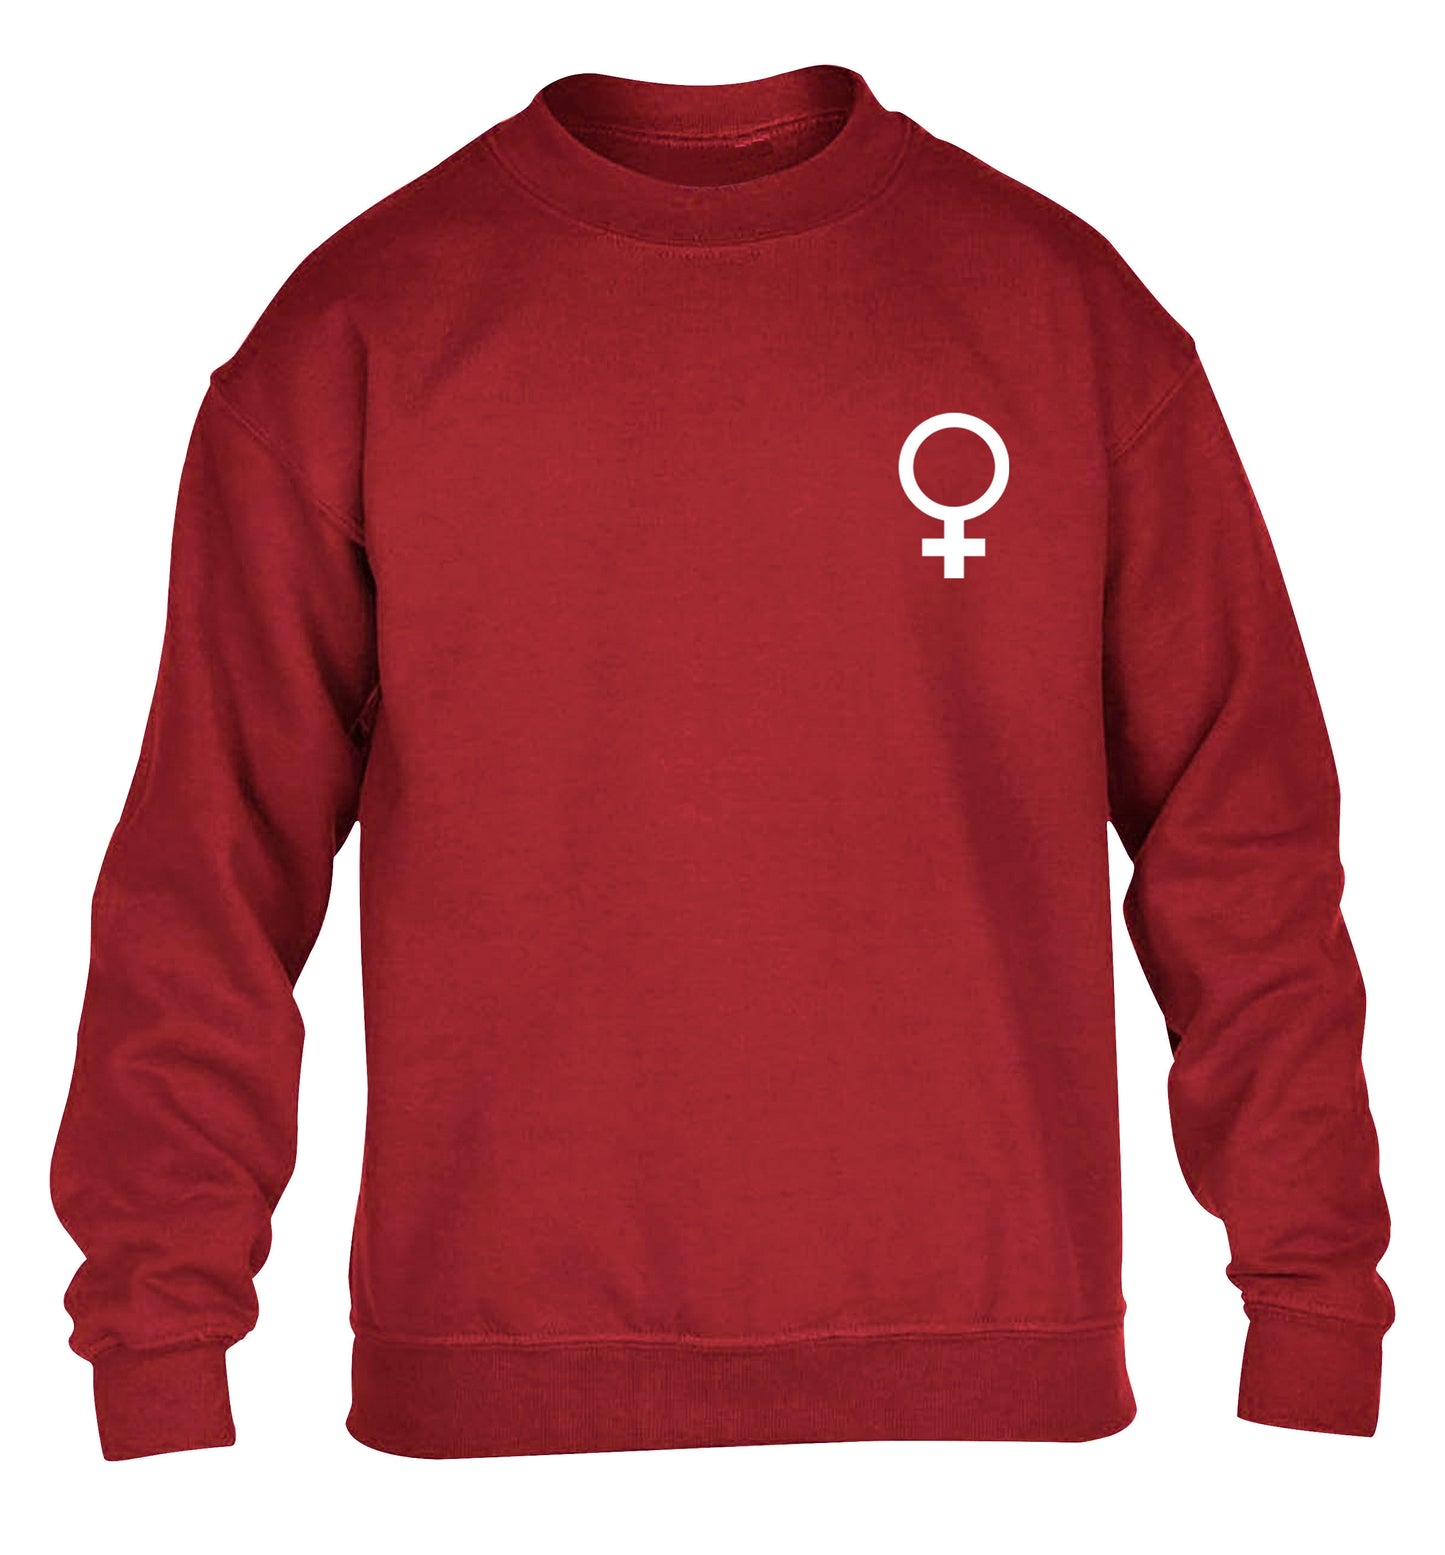 Female pocket symbol children's grey sweater 12-14 Years